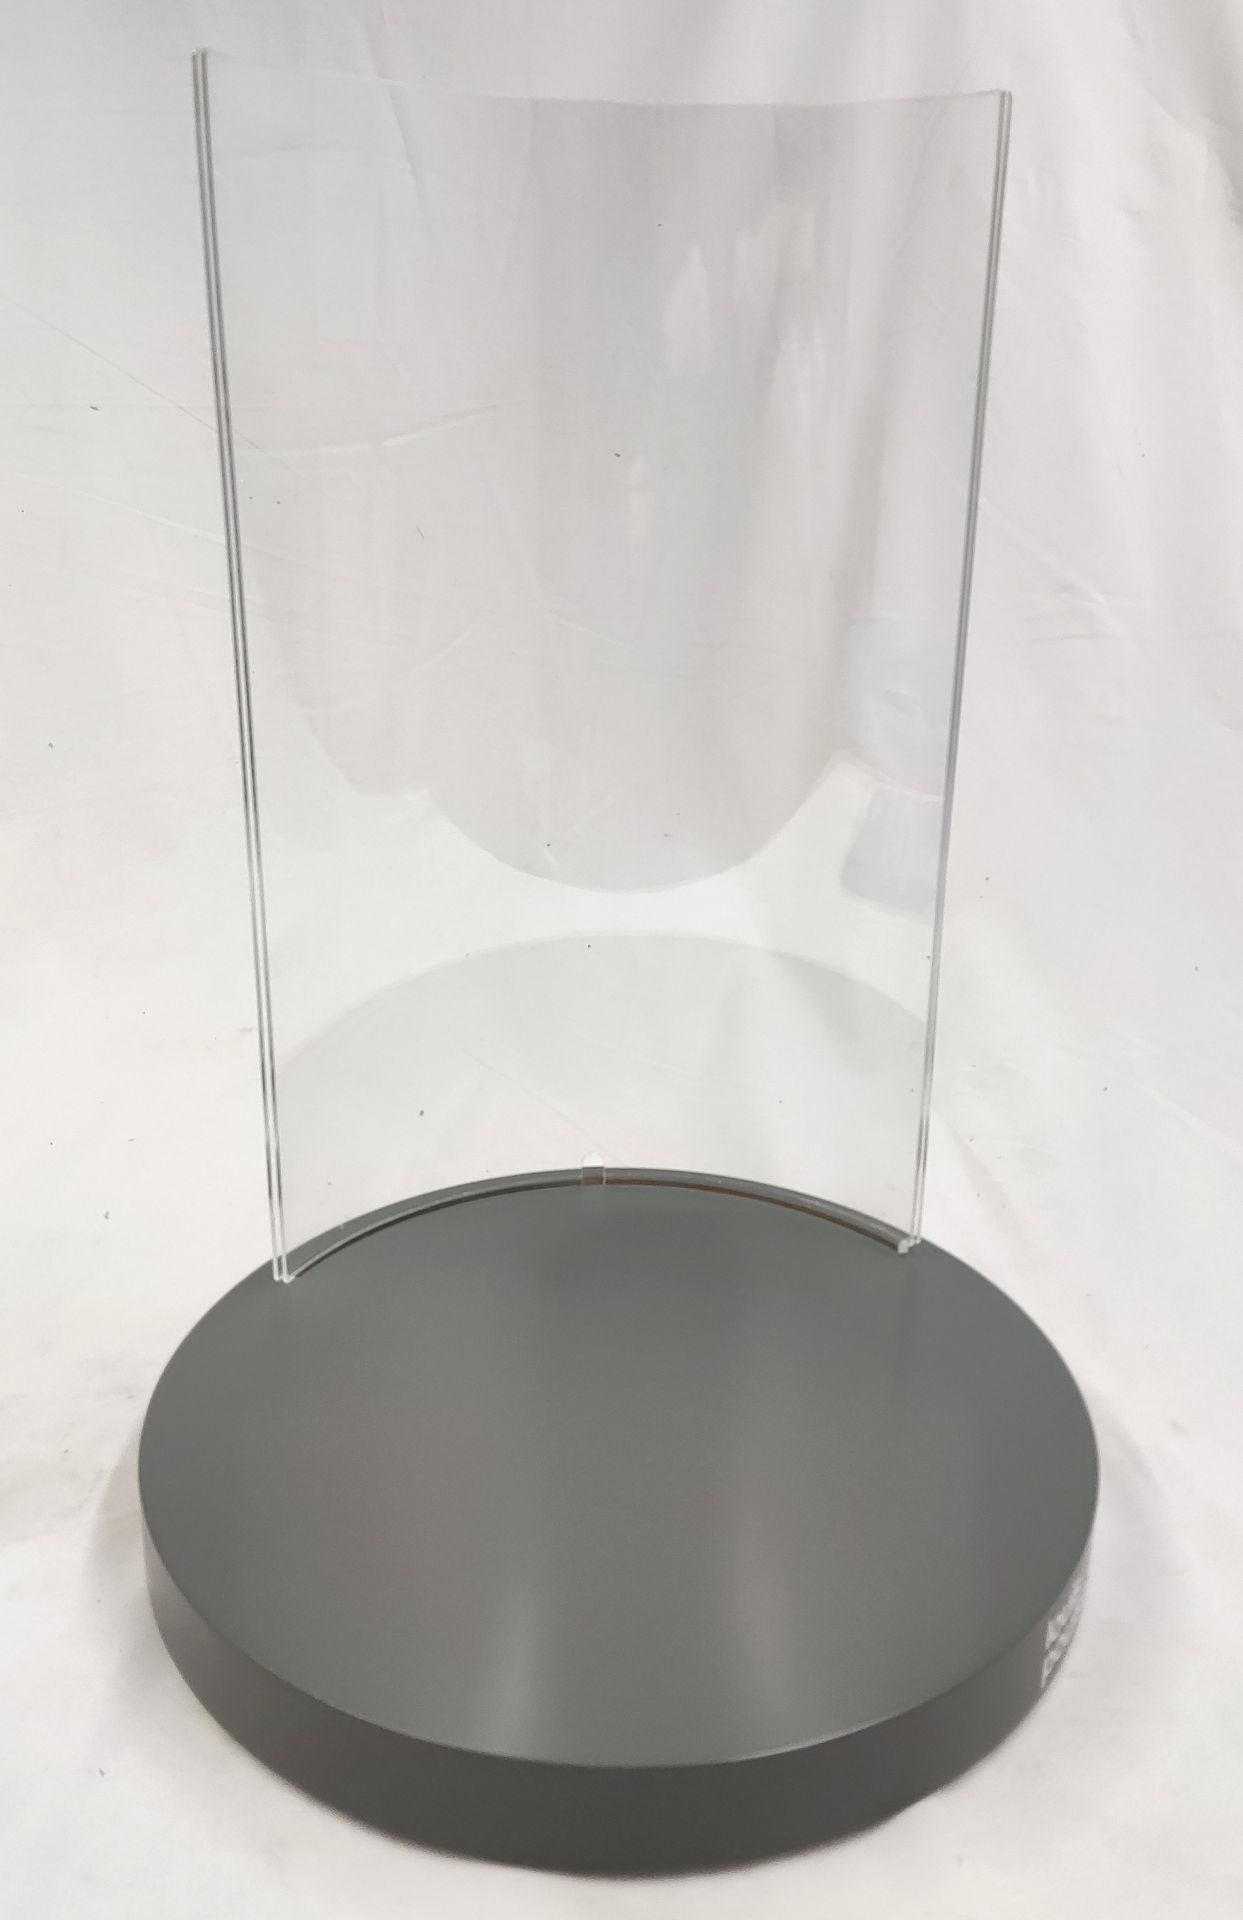 1 x LOUIS POULSEN Table Display - Diameter Approx 33Cm, Height 47cm - Lp_2020Ss_405 - Ref: